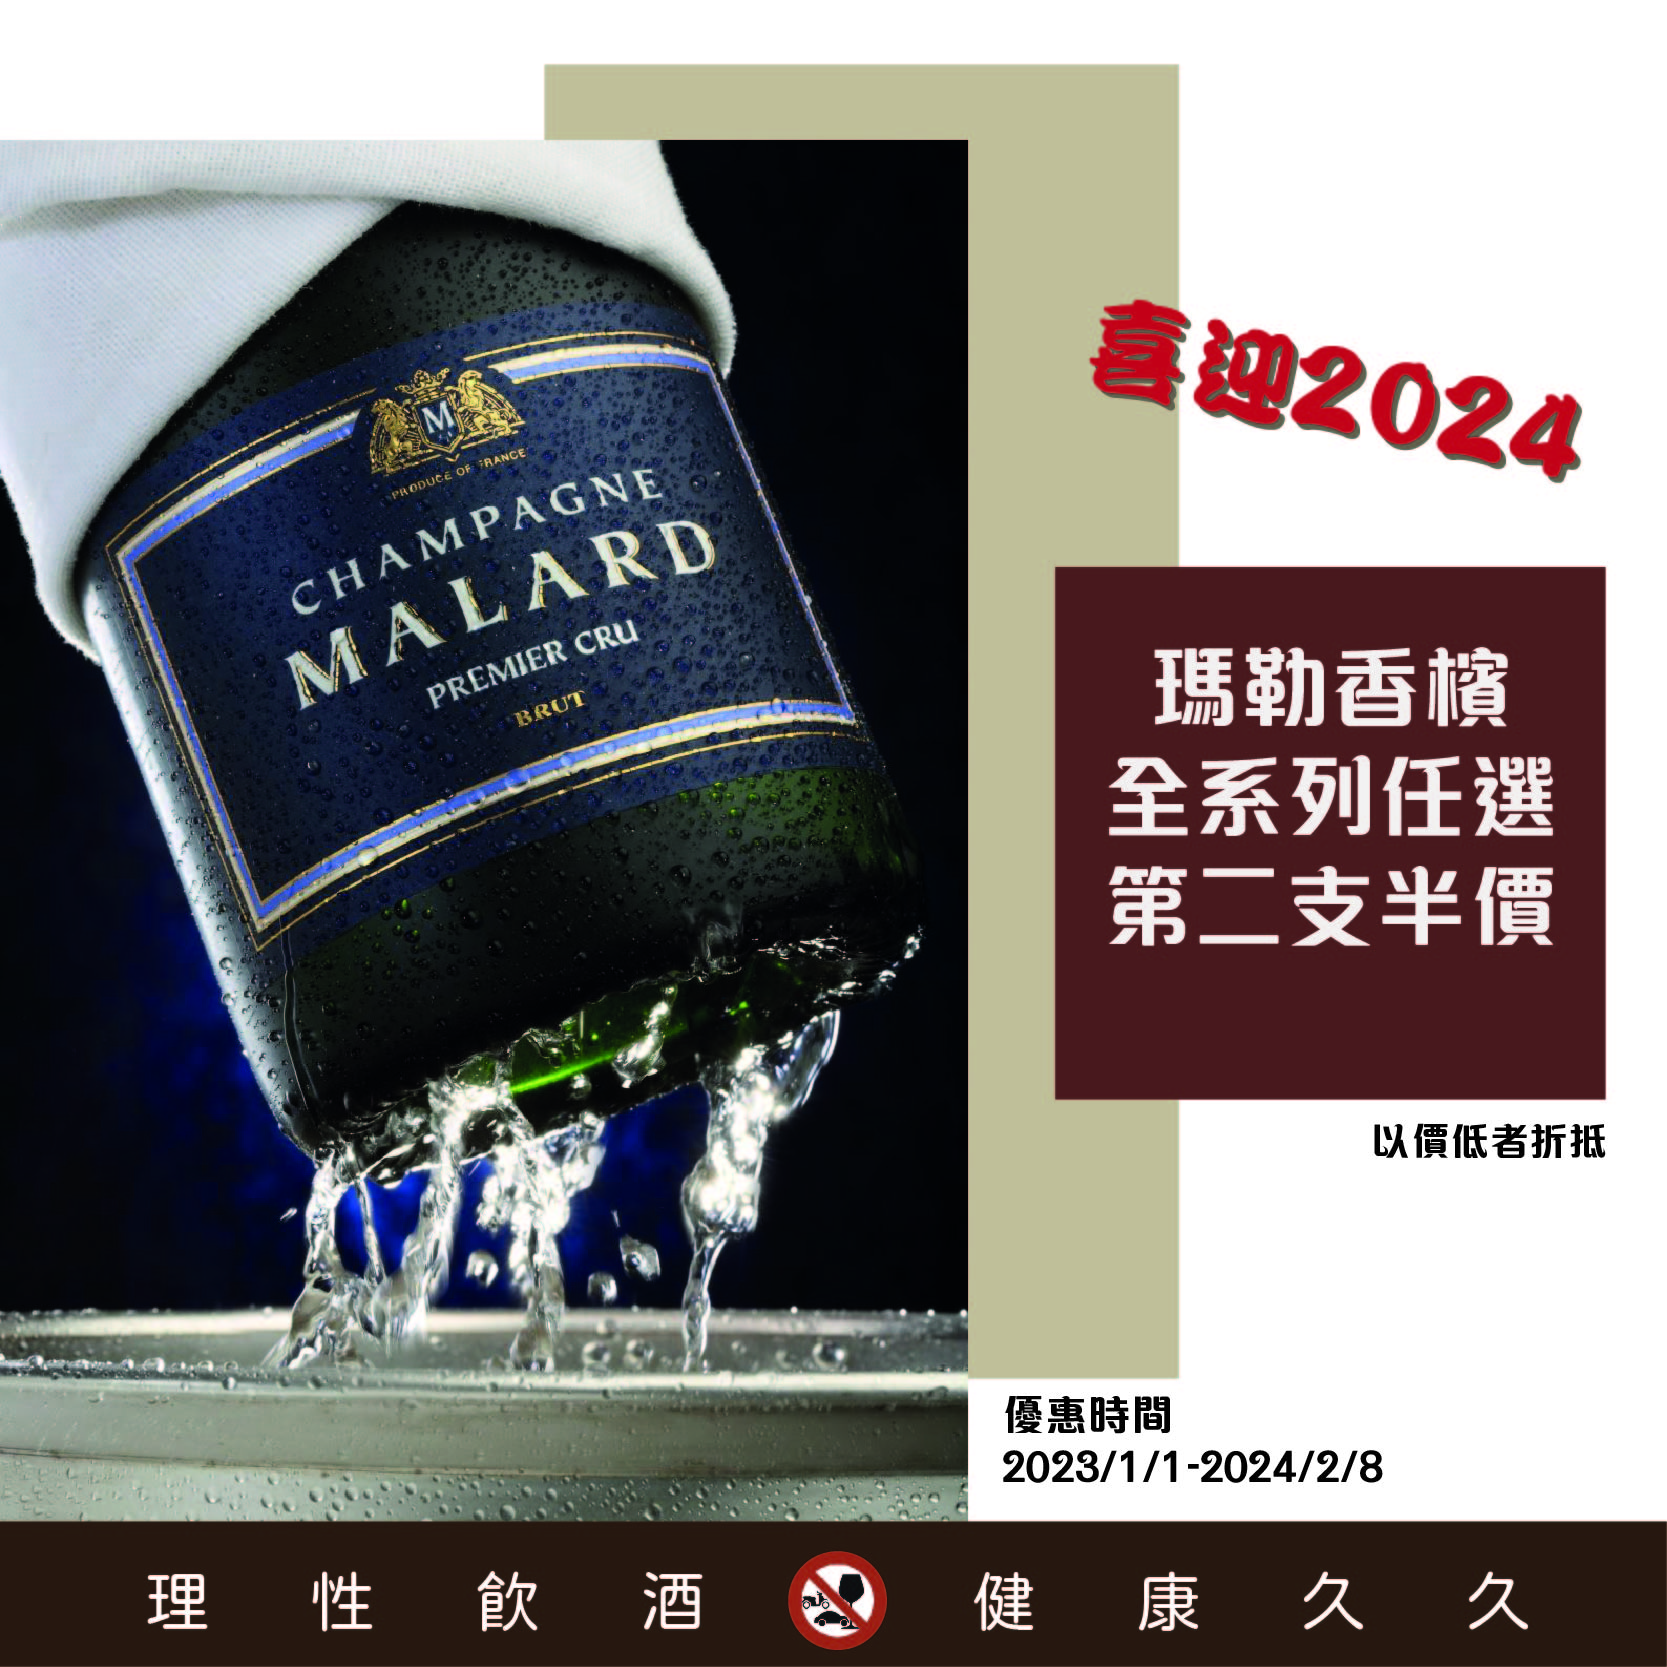 Nicolas Taiwan - 2024 January Champagne Promotion - Malard promotion